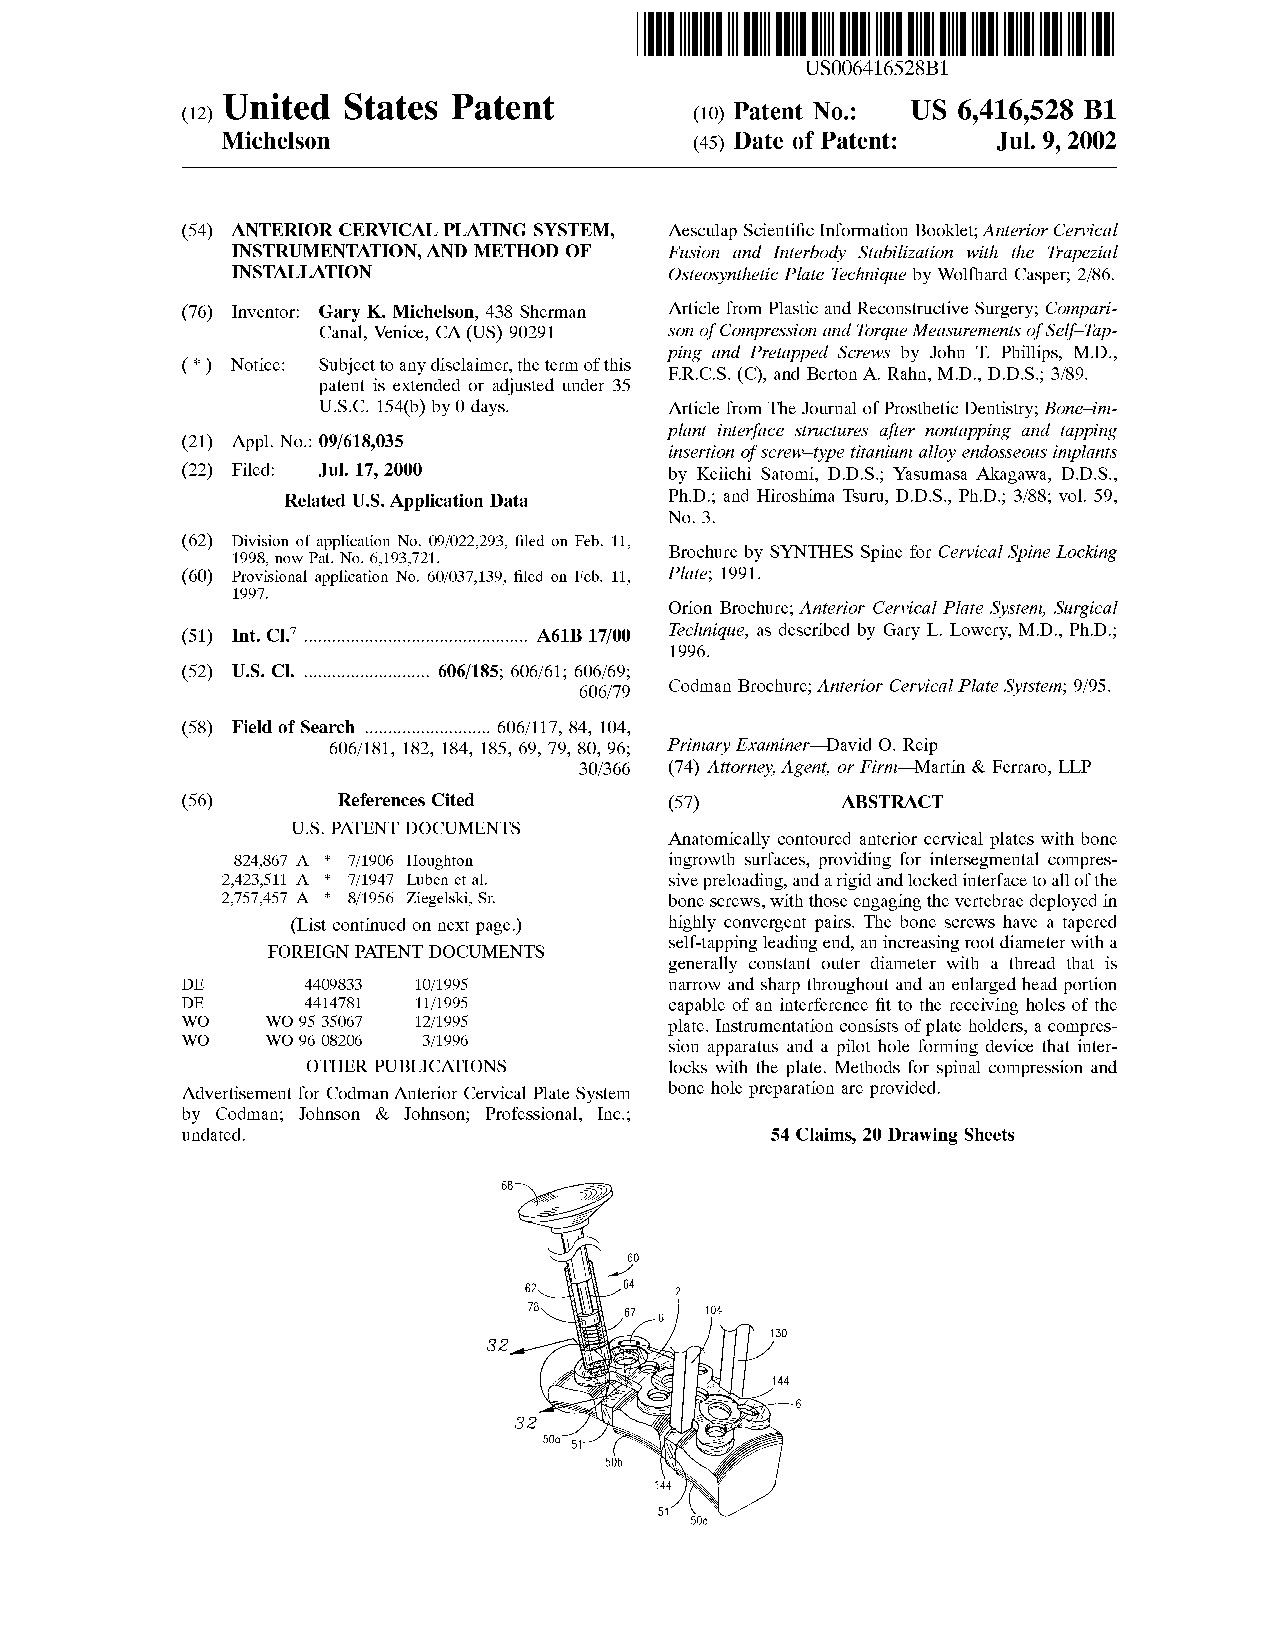 Anterior cervical plating system, instrumentation, and method of     installation - Patent 6,416,528